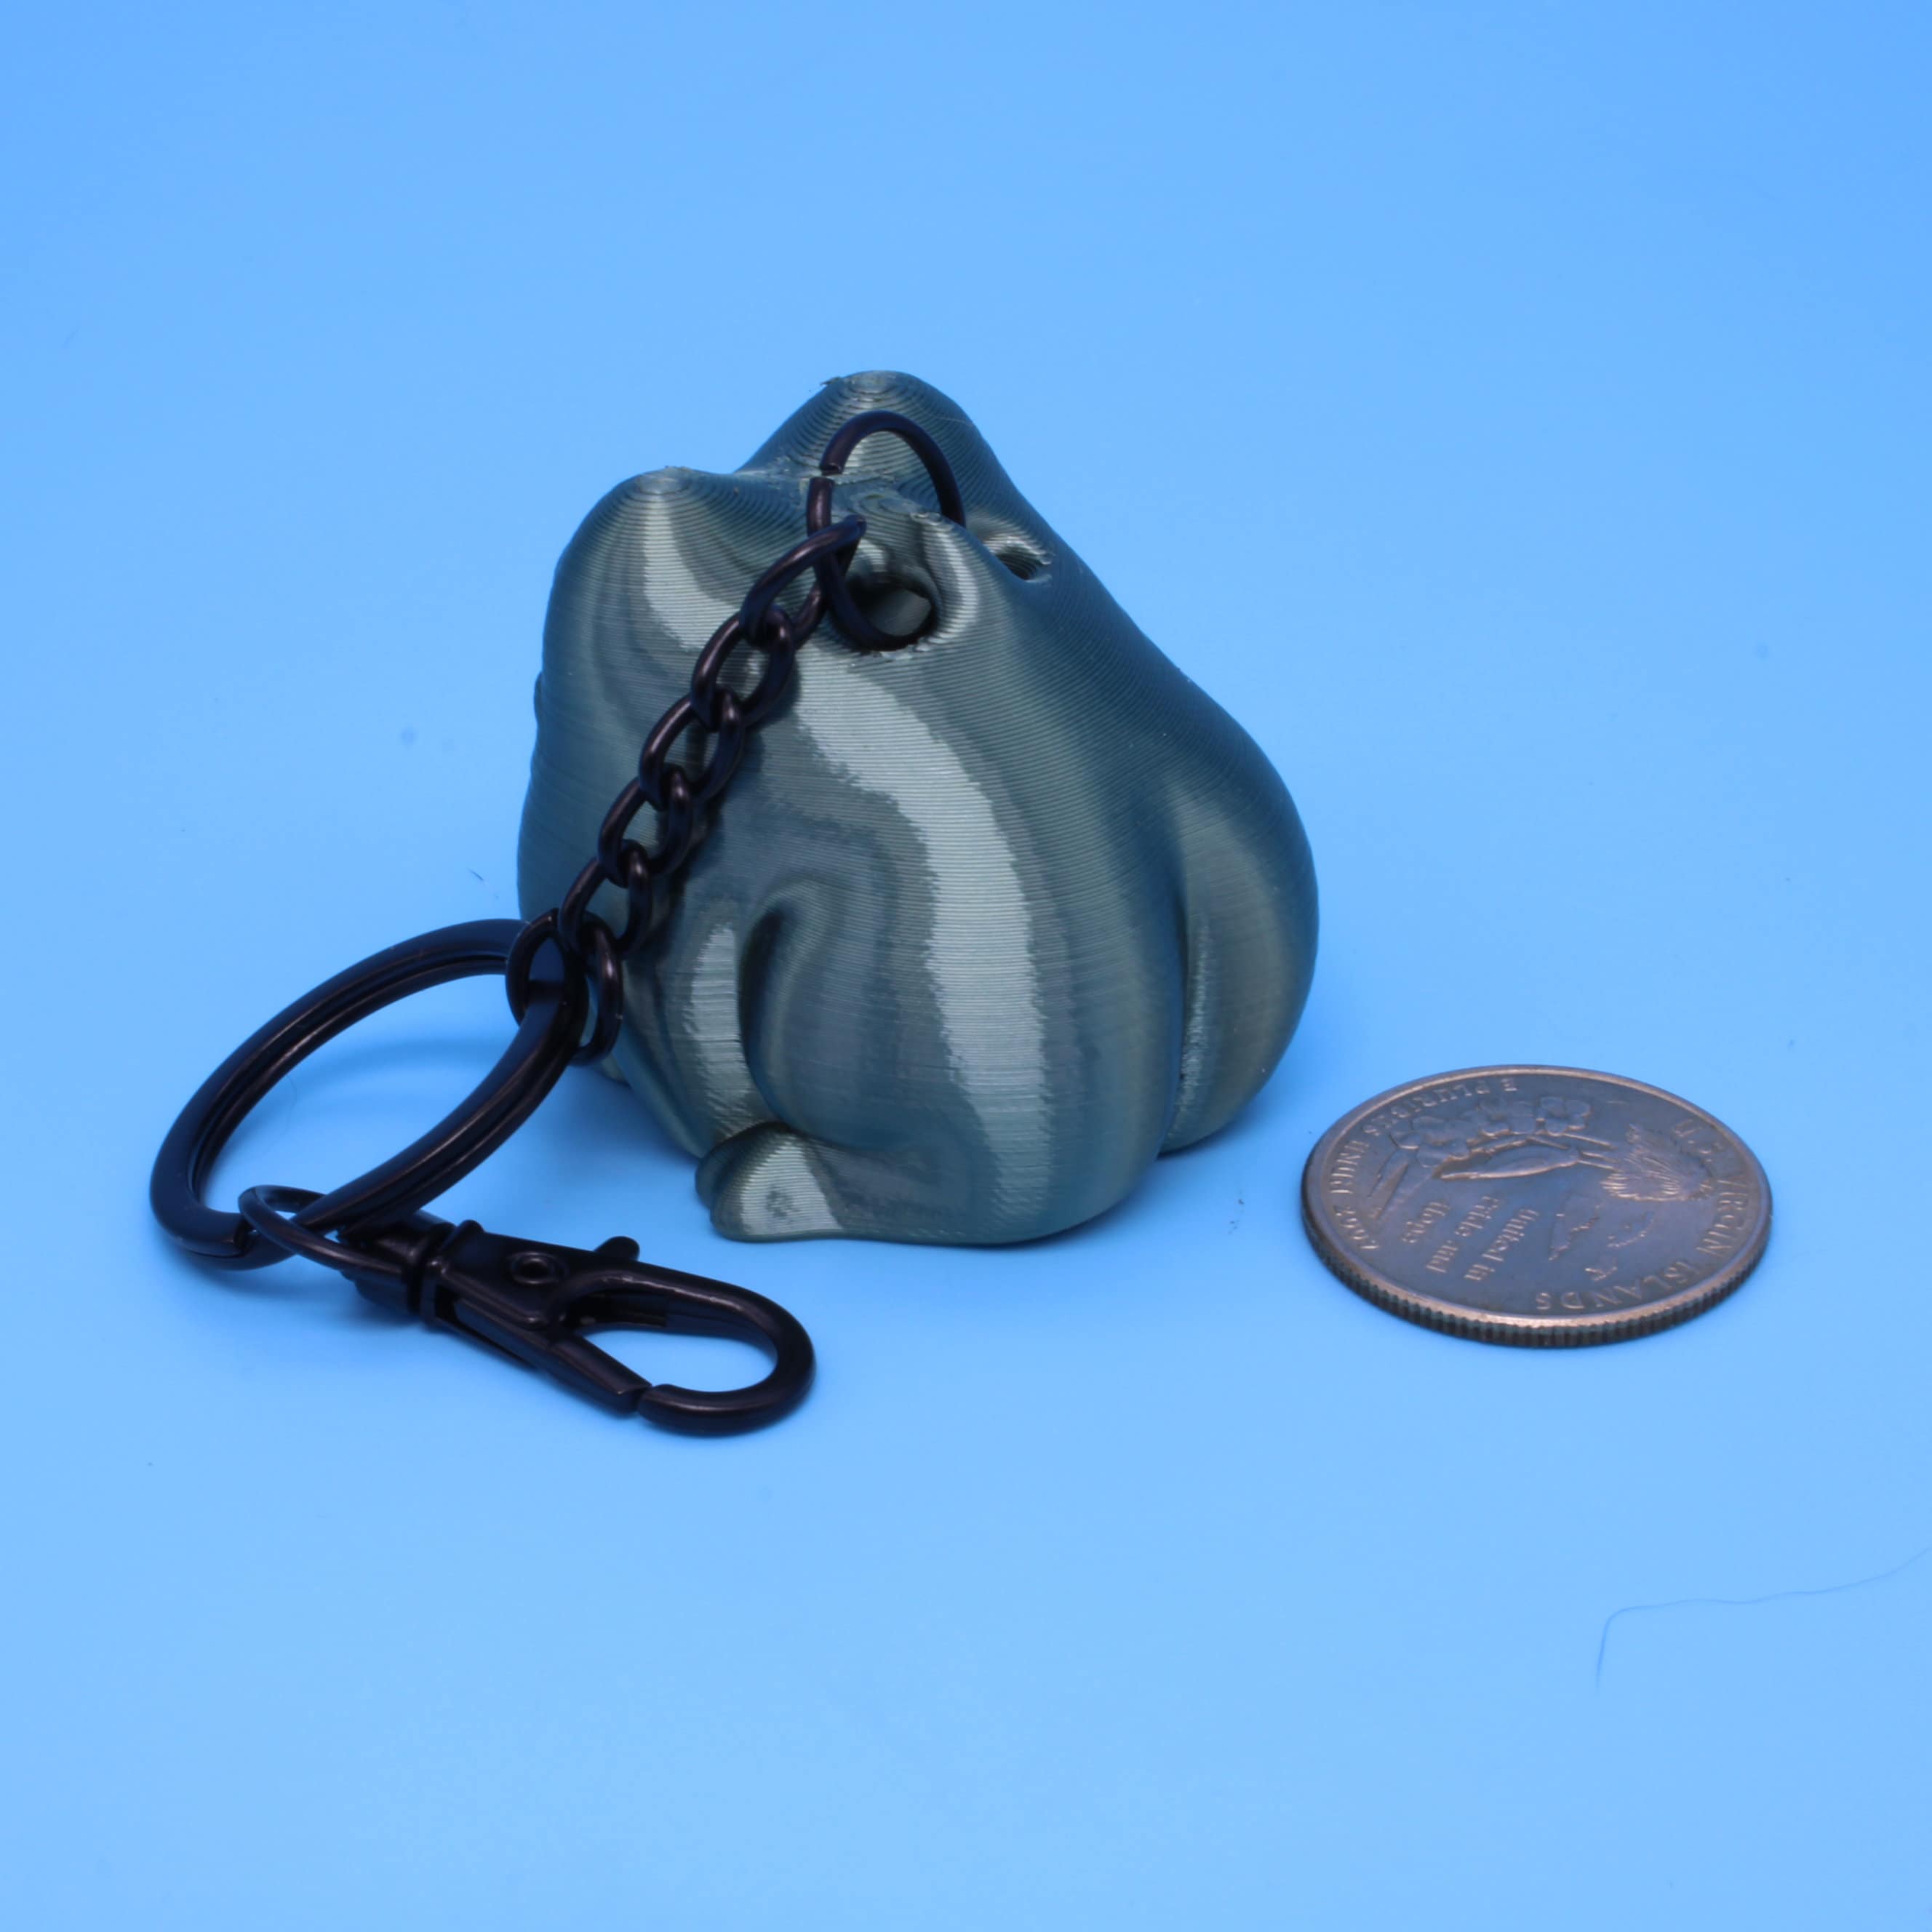 Miniature Butt Frog Keychain. 3D Printed